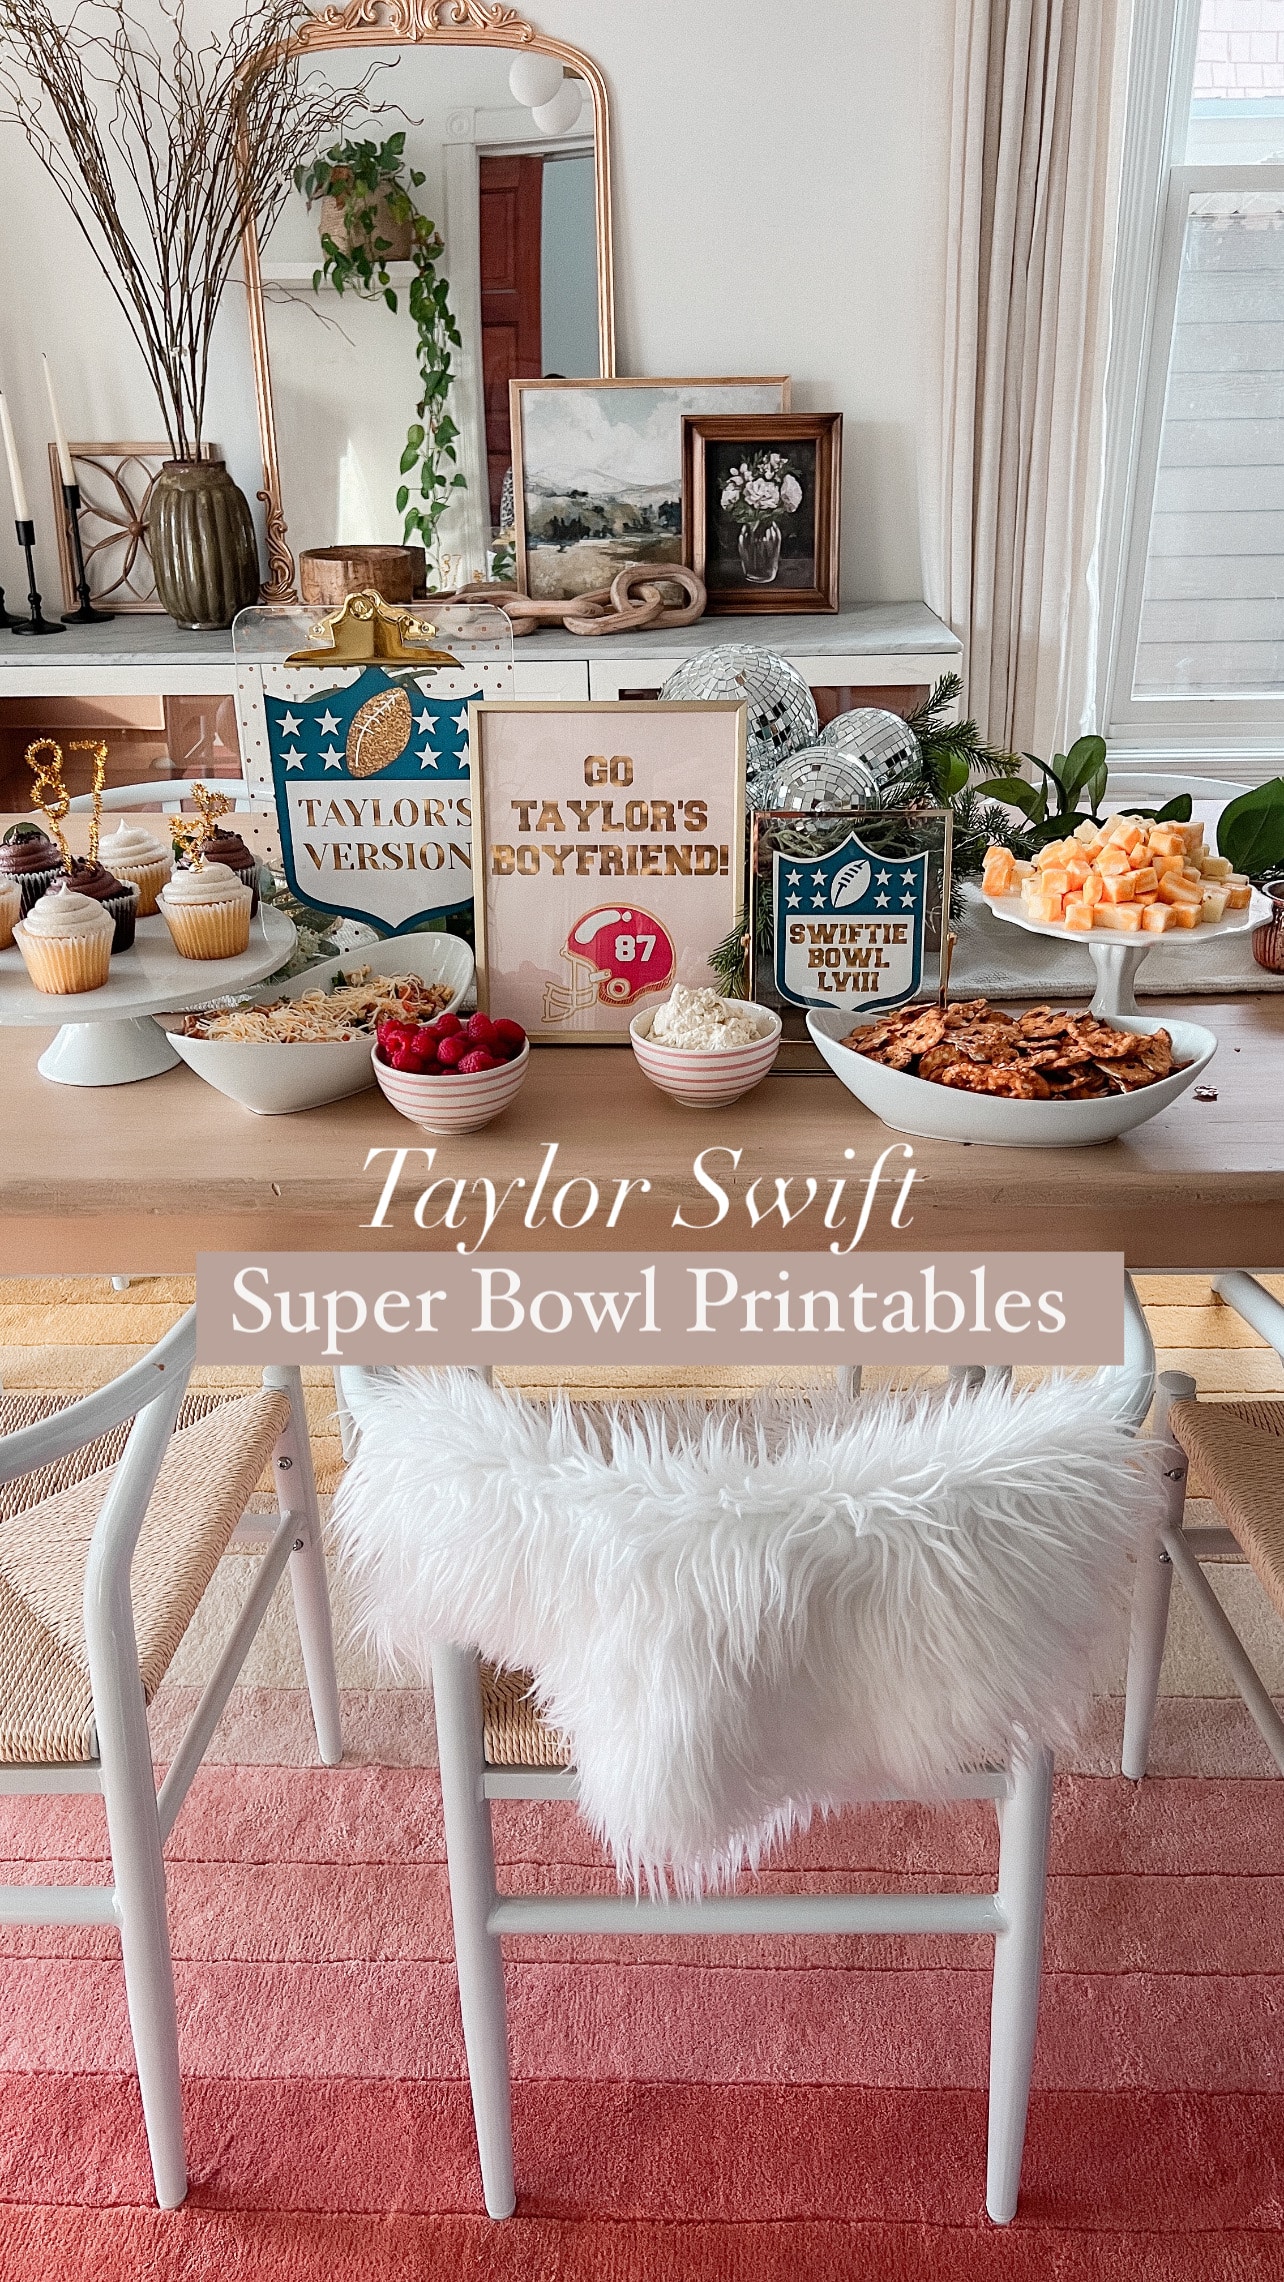 3 Taylor Swift-Inspired Super Bowl Printables. Elevate your Super Bowl party with Taylor Swift-inspired printables.